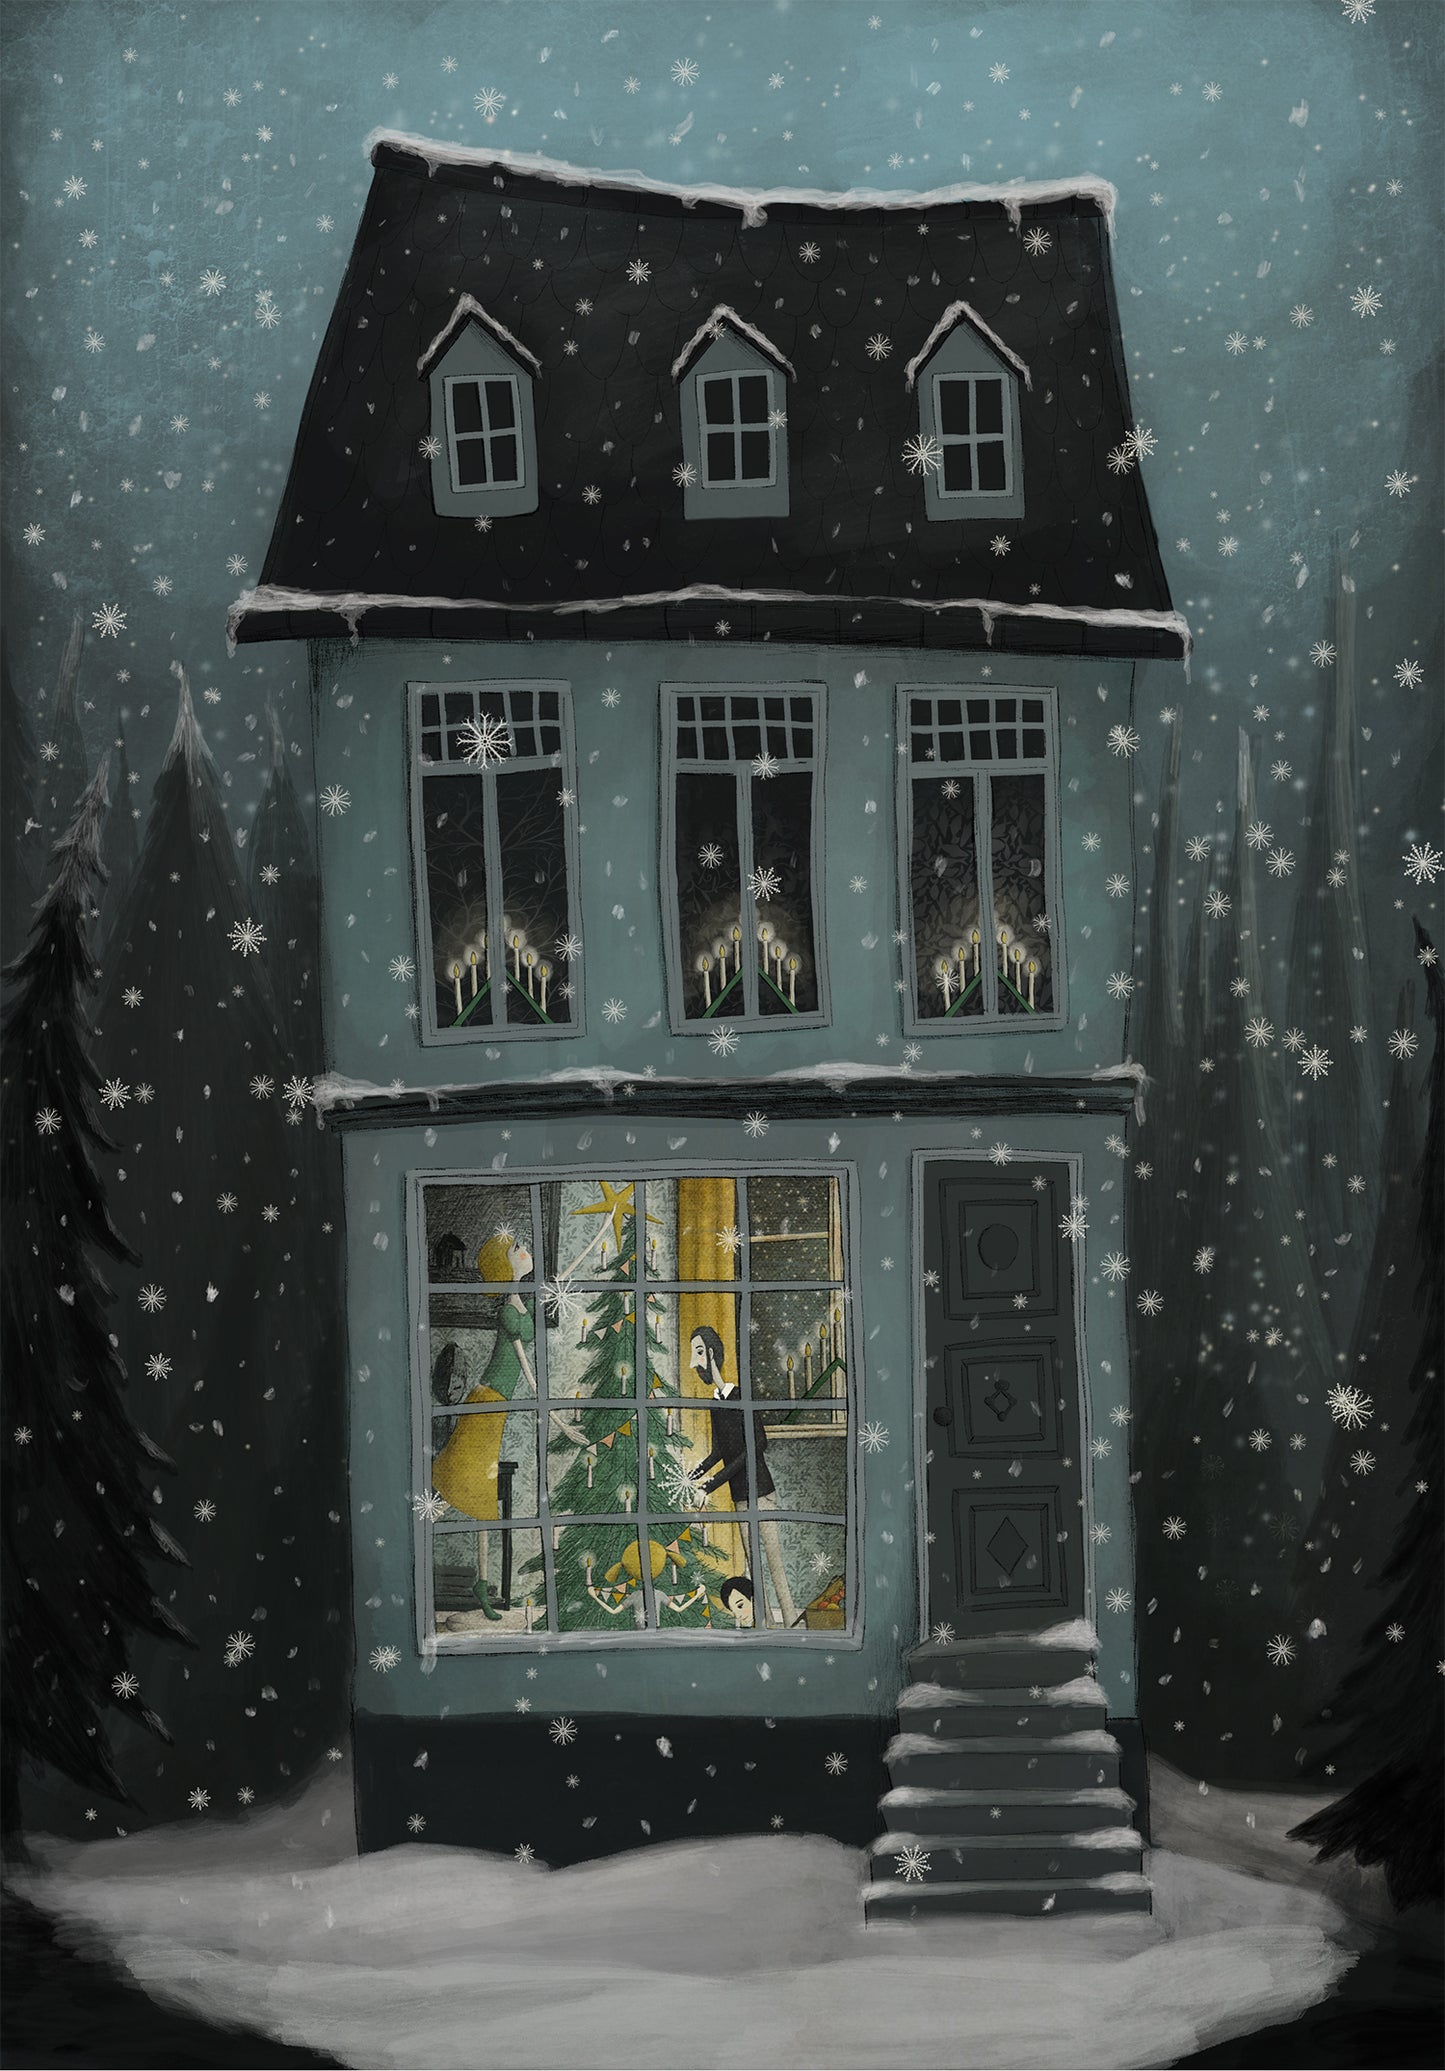 The night before Christmas - Art print